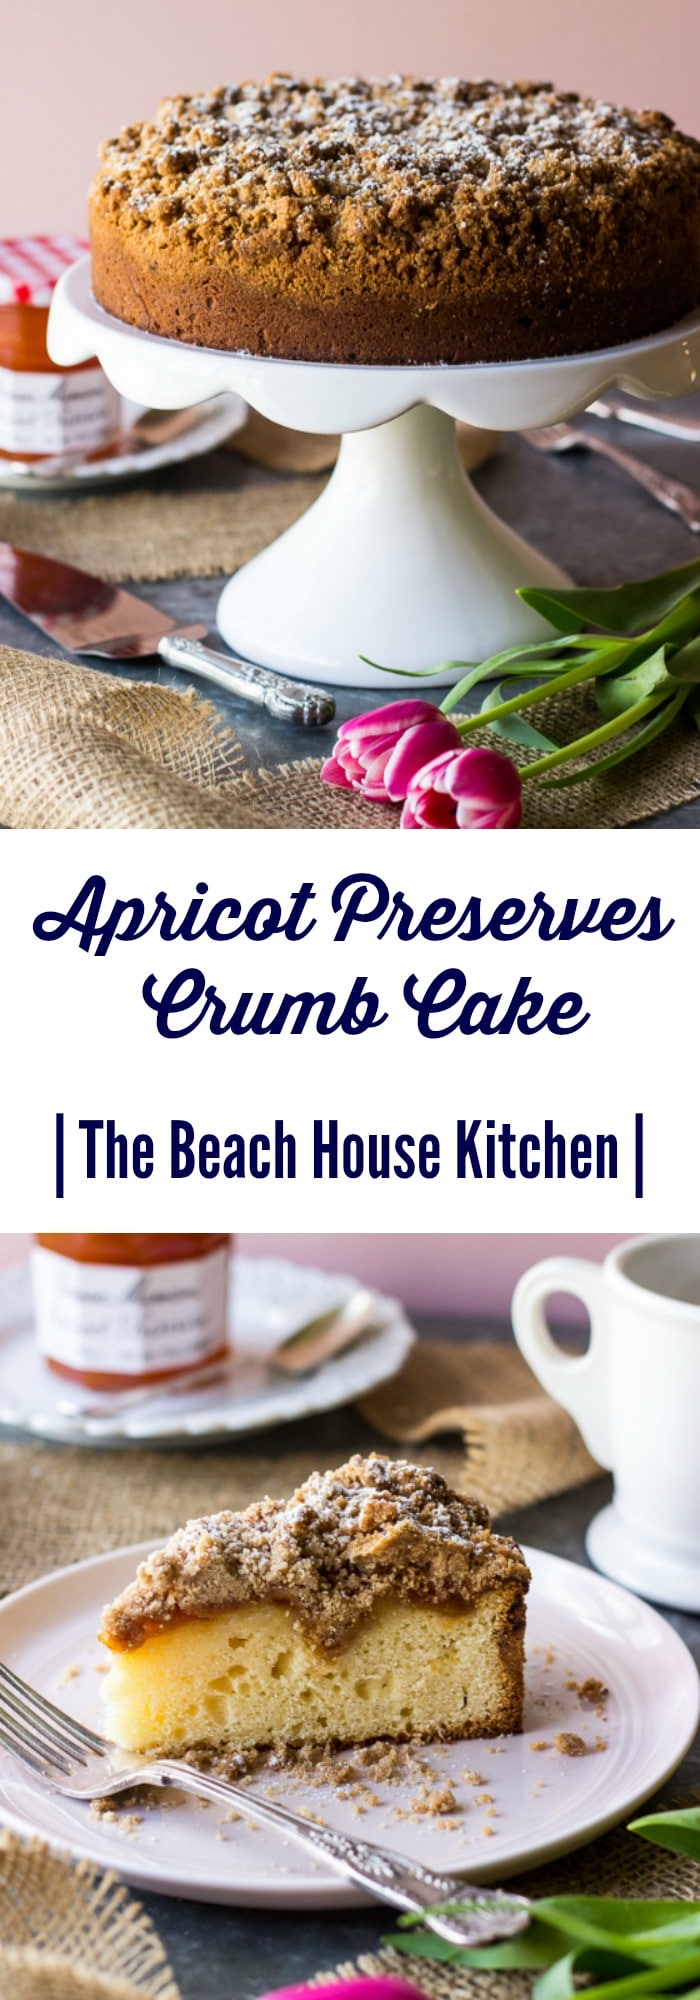 Apricot Preserves Crumb Cake